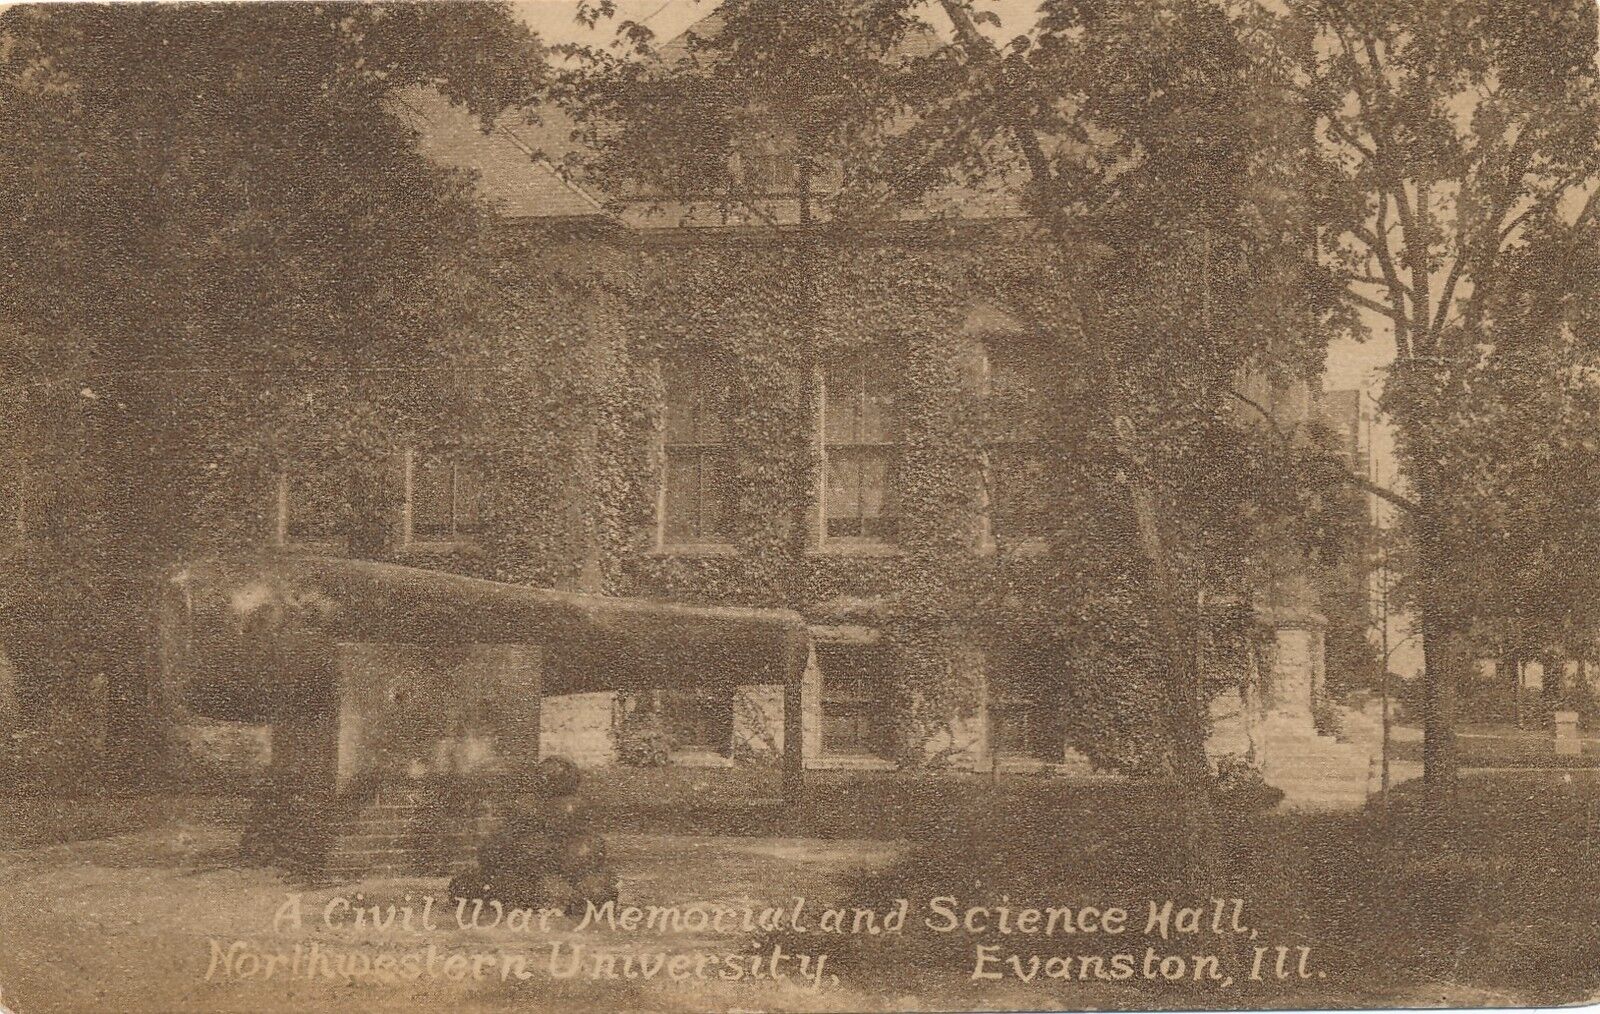 EVANSTON IL – Northwestern University A Civil War Memorial and Science Hall